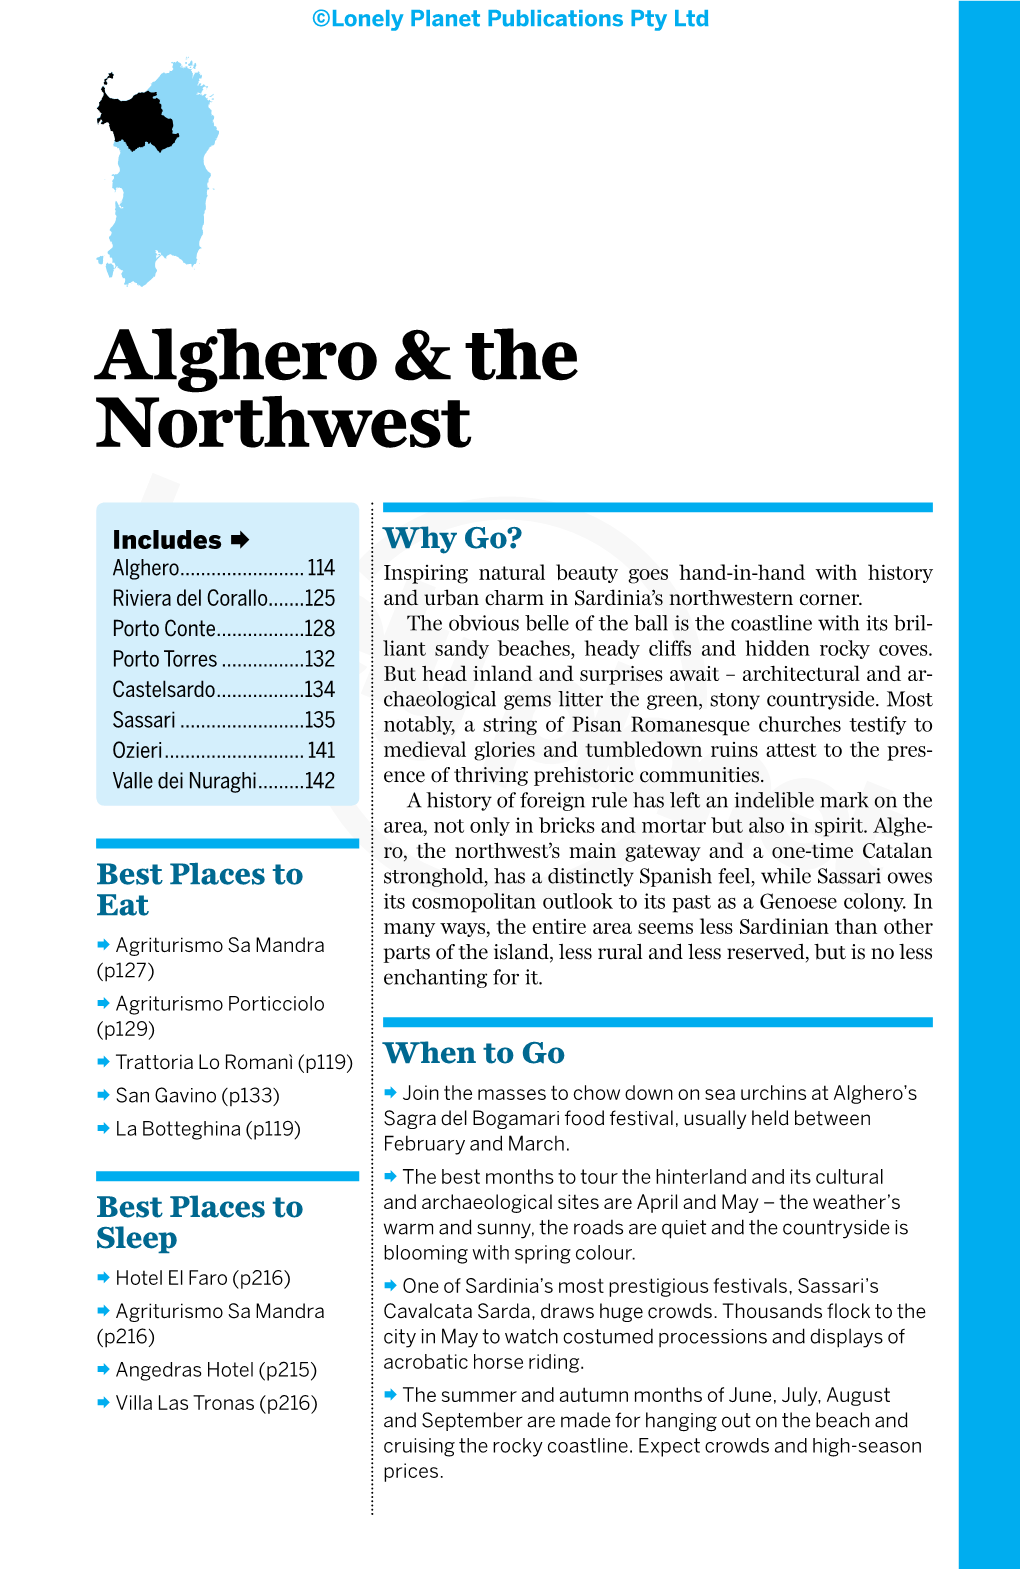 Alghero & the Northwest